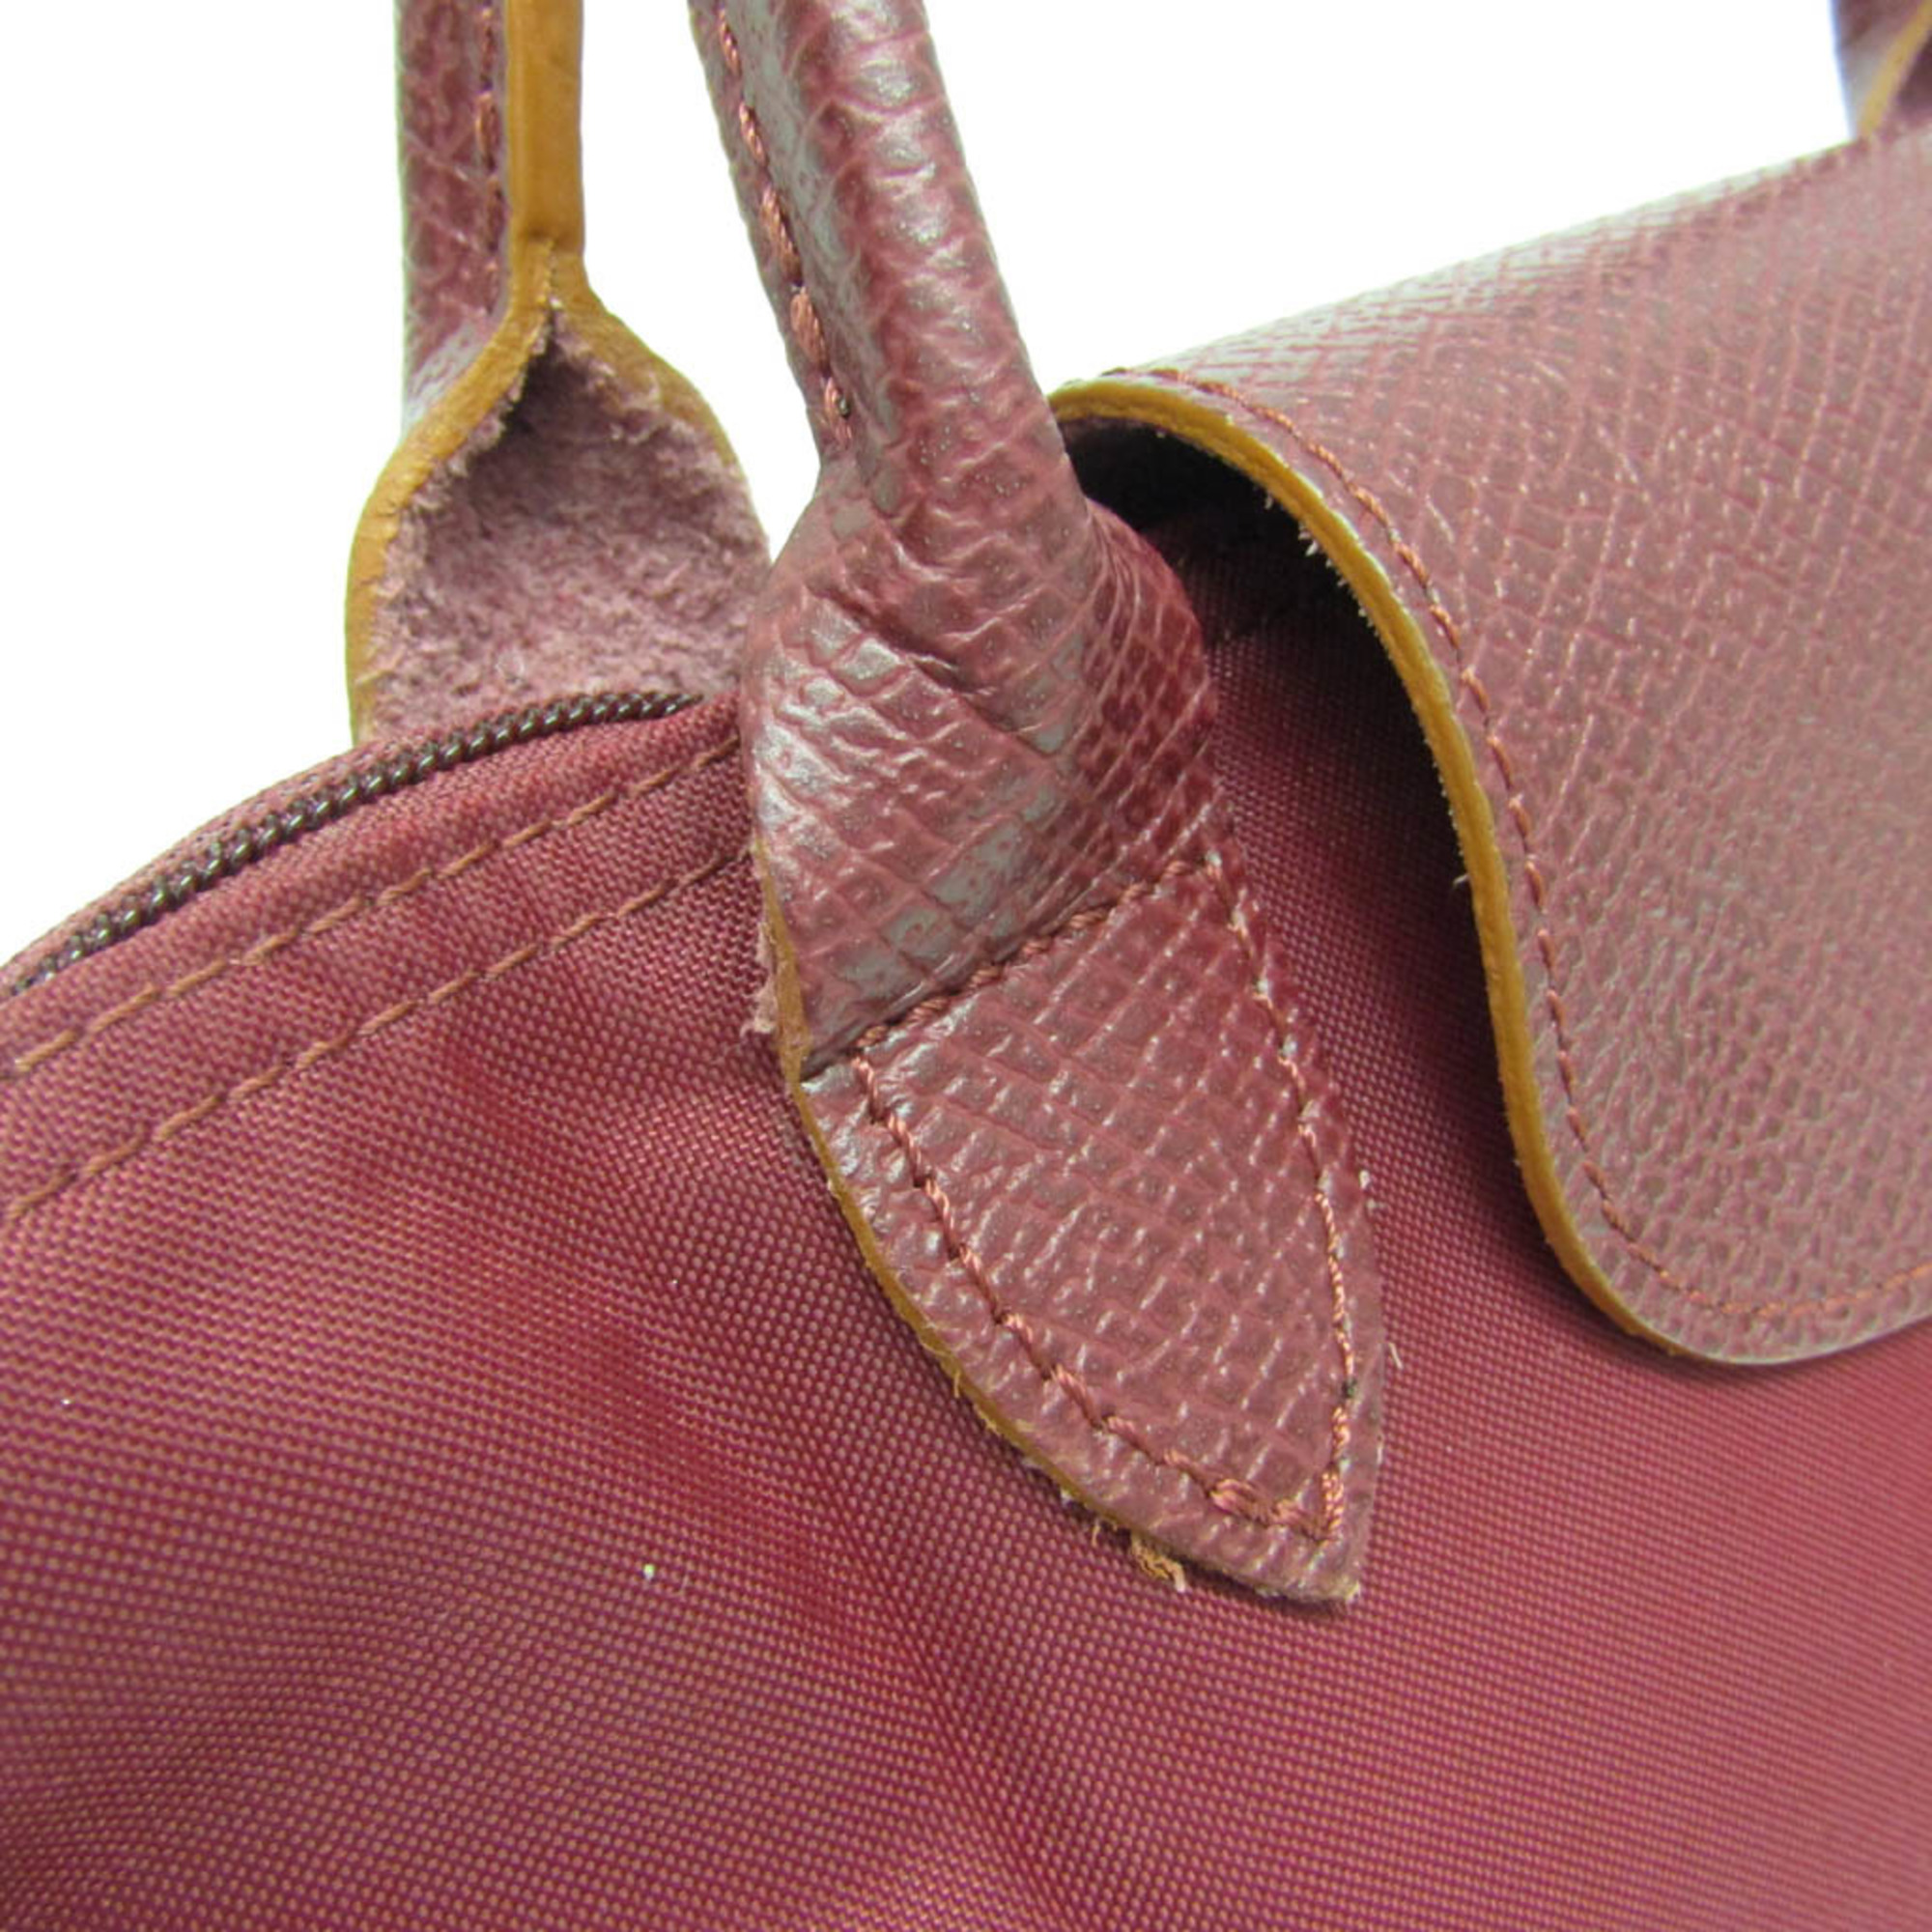 Longchamp Le Pliage Club 1621 619 209 Women's Nylon,Leather Folding Bag,Handbag Bordeaux